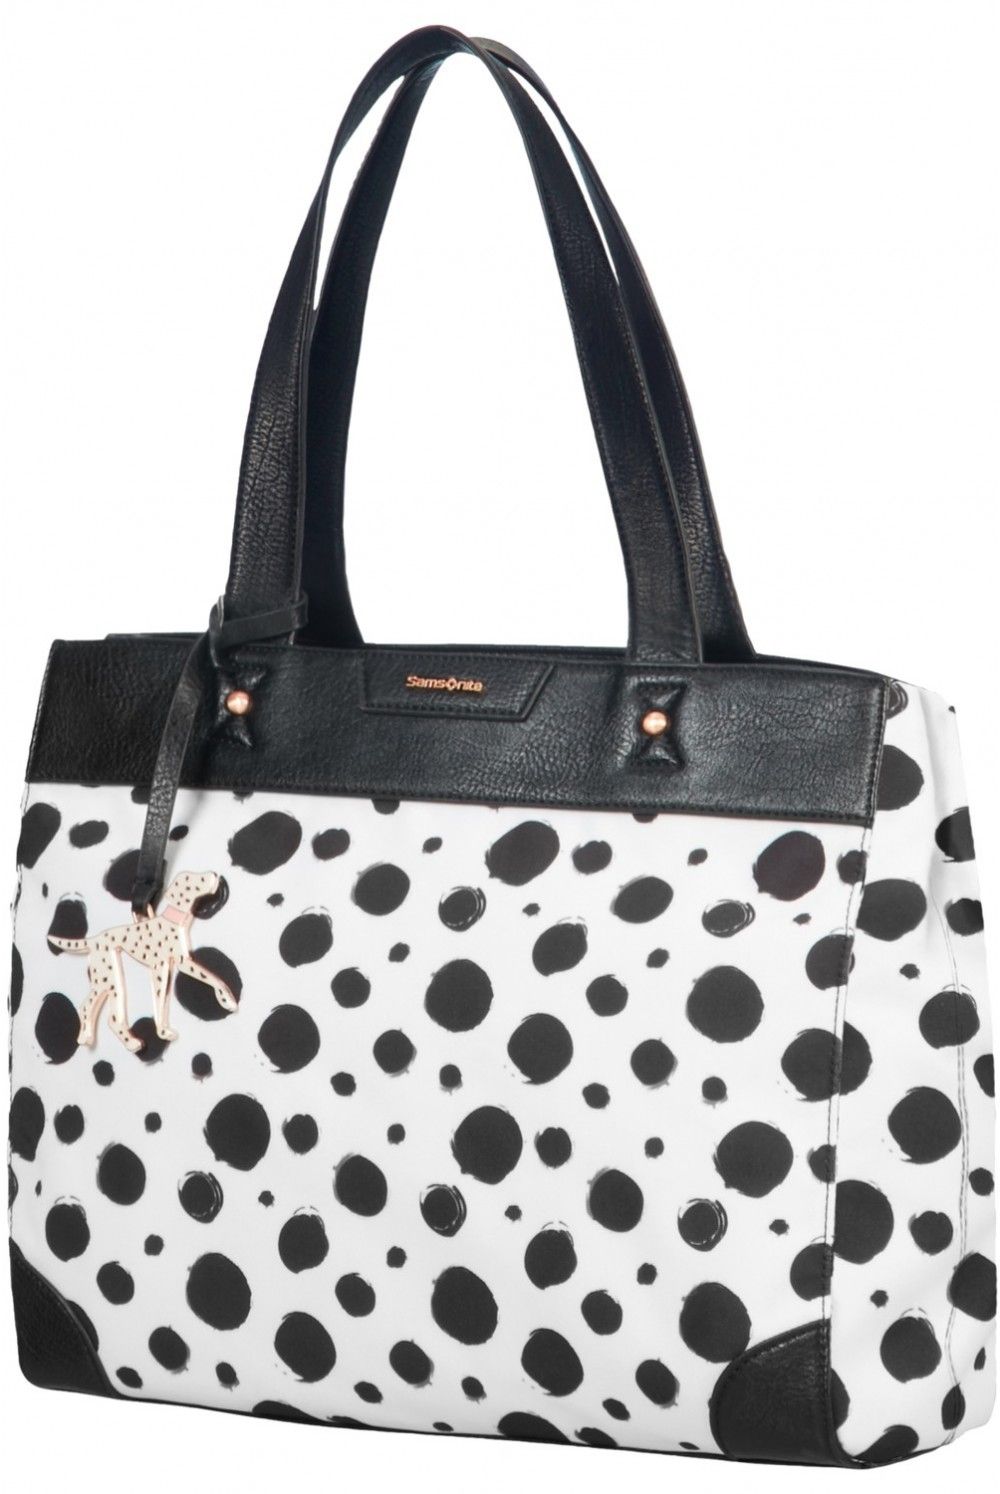 Samsonite Disney Forever Shoulder Bag Dalmatians